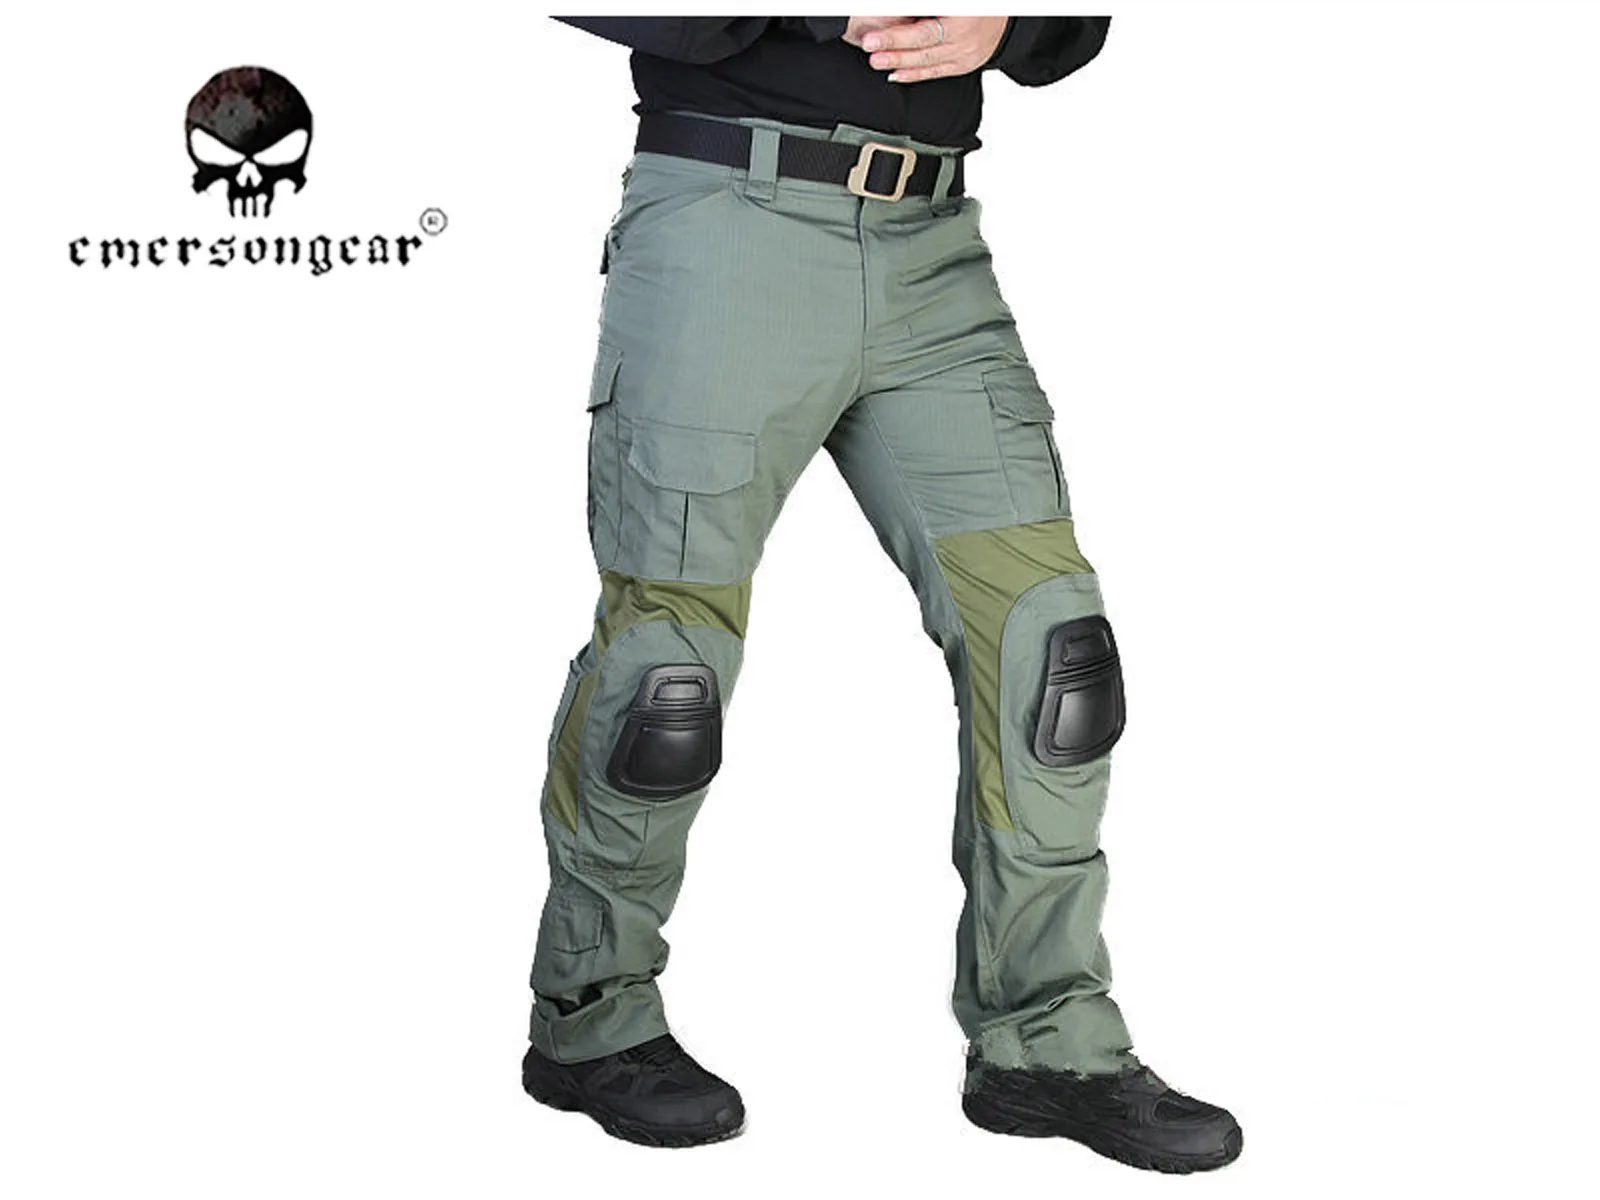 EMERSON Gen2 Tactical Pants Combat bdu pants with Knee Pad Foliage Green EM7038F